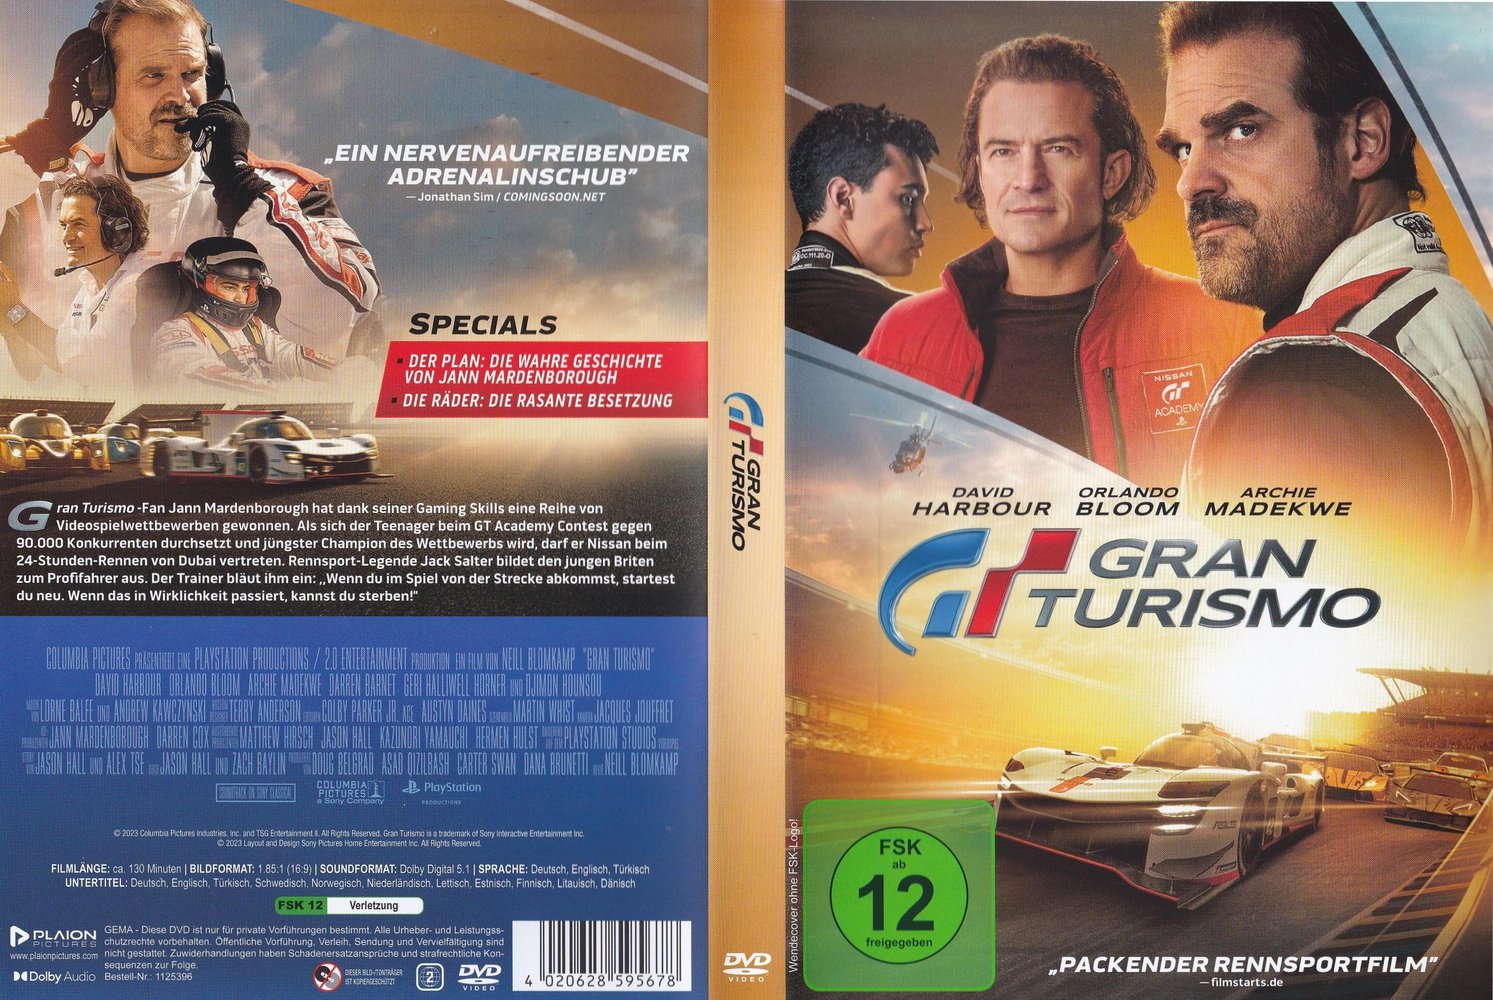  Gran Turismo - DVD + Digital : David Harbour, Orlando Bloom,  Archie Madekwe, Darren Barnet, Geri Halliwell: Movies & TV